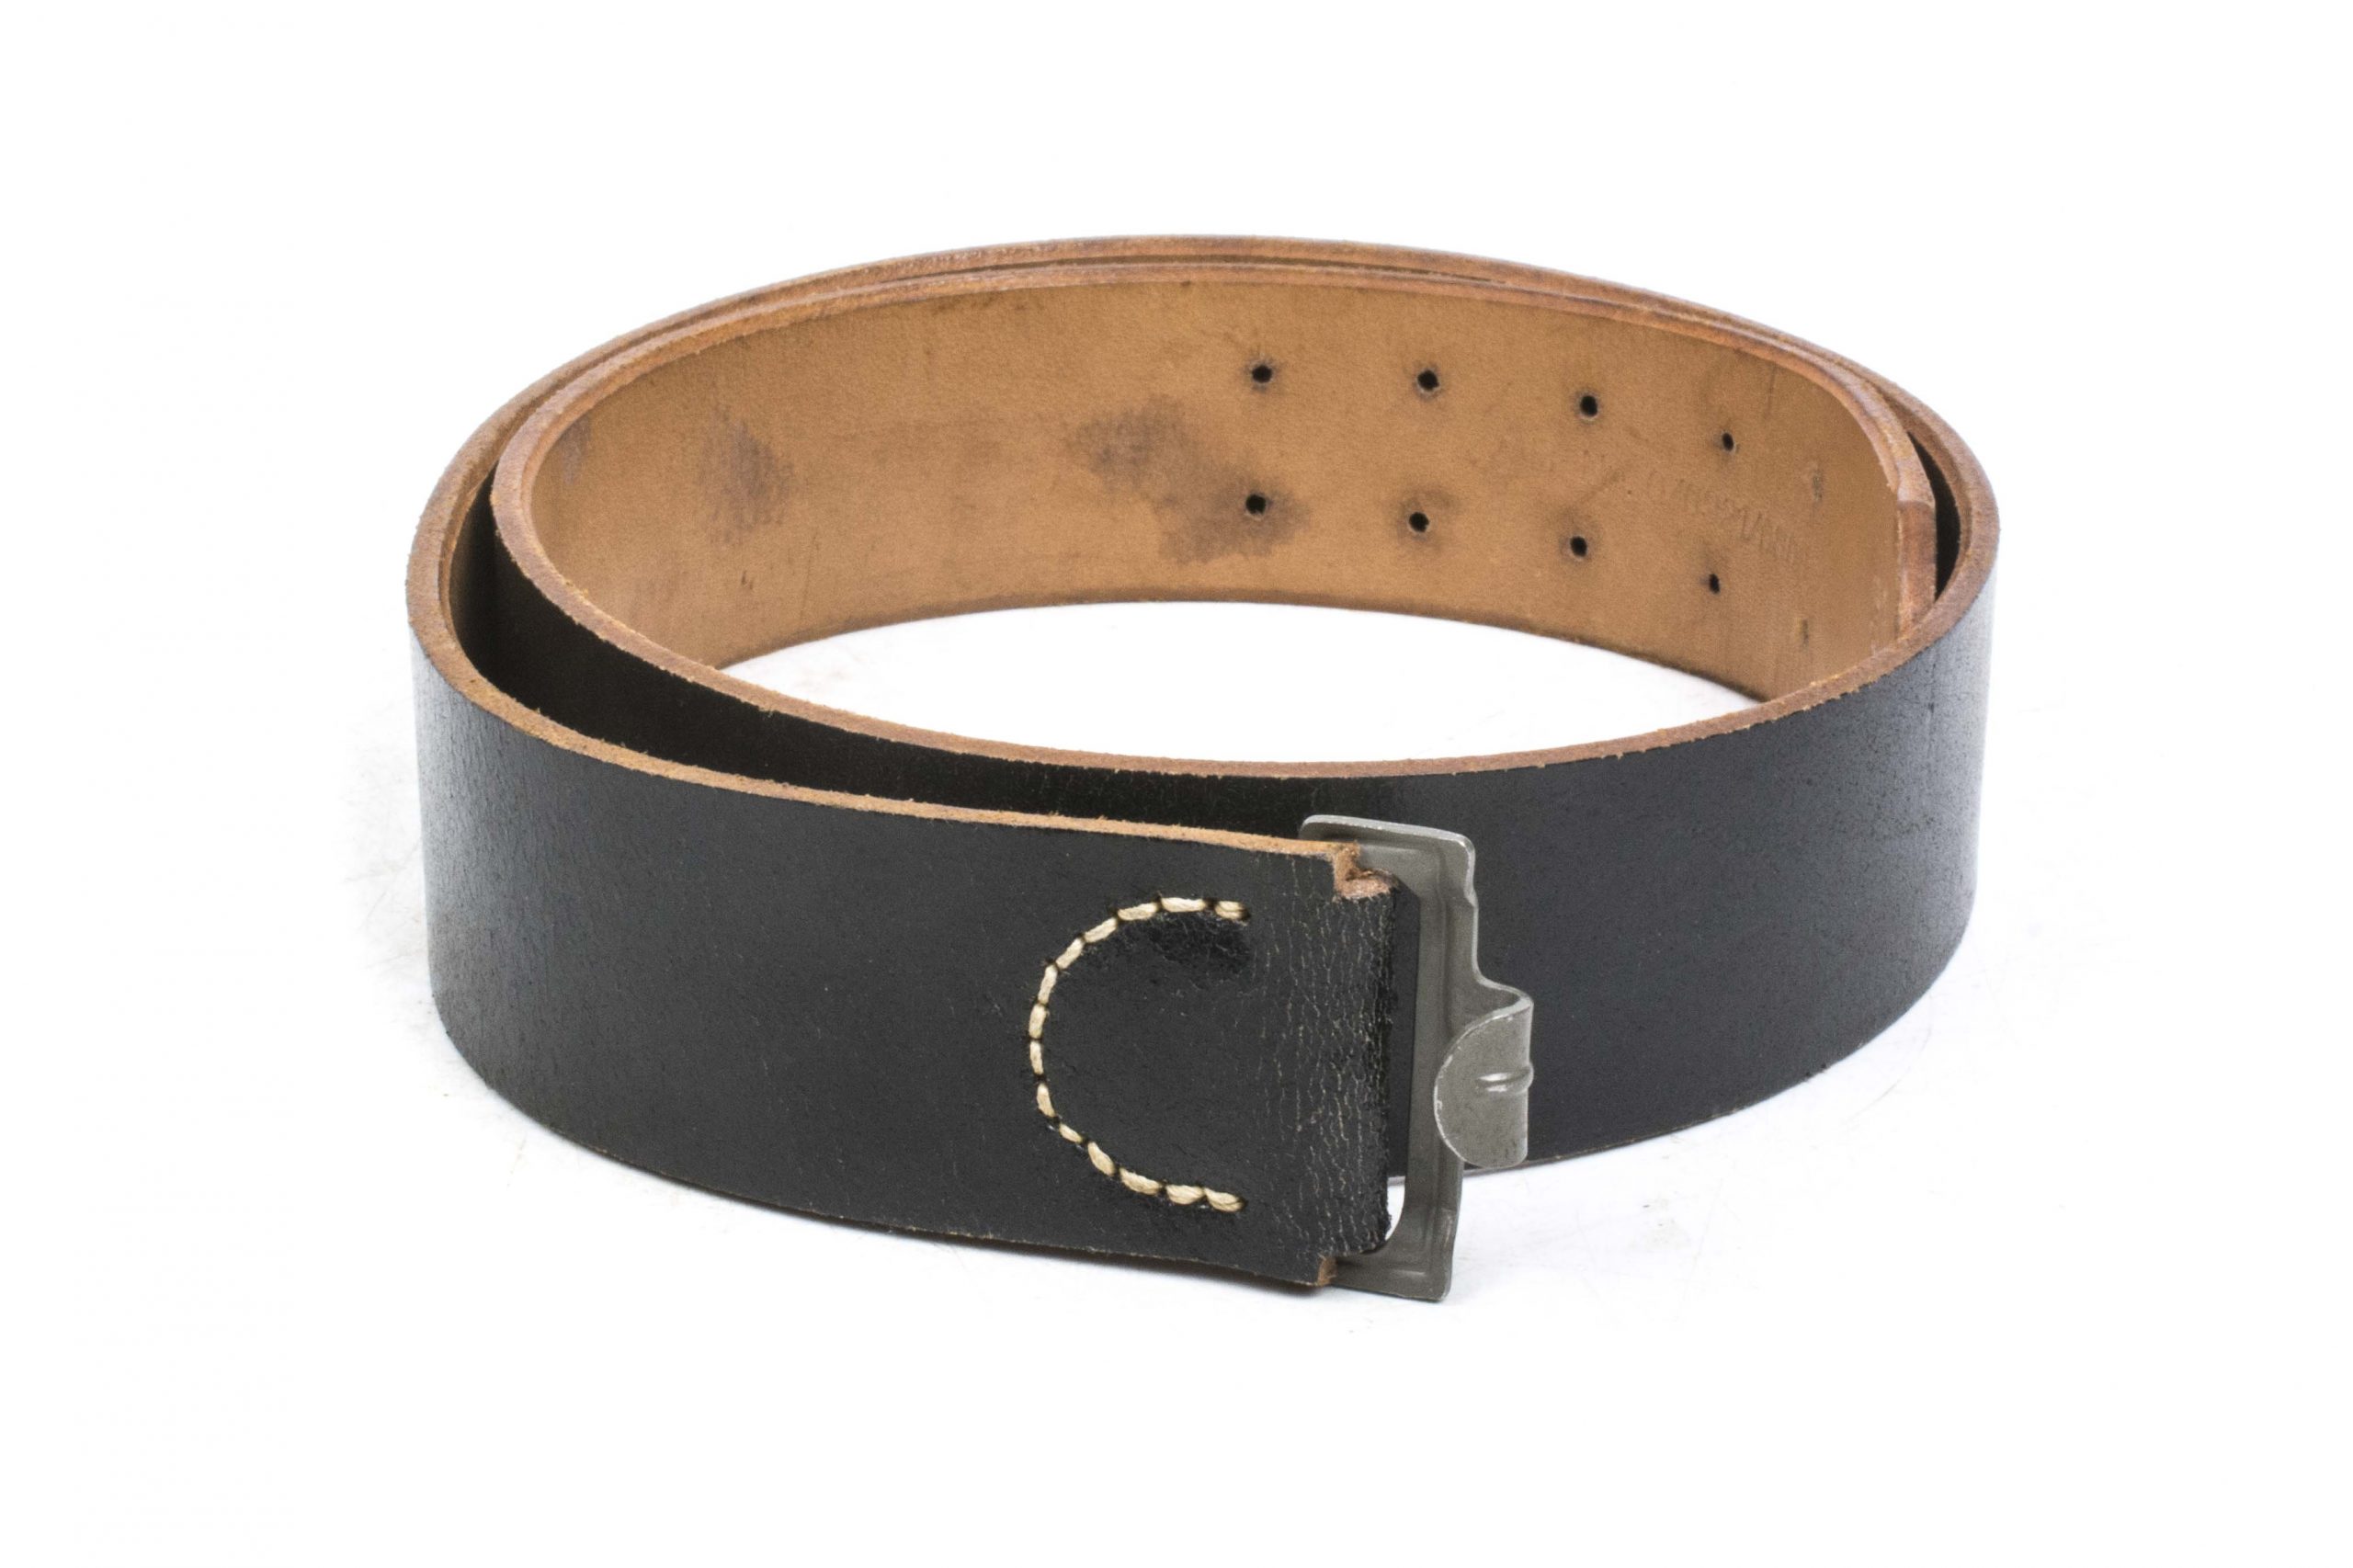 Mint leather equipment belt marked 0/0921/0008 size 90 – fjm44